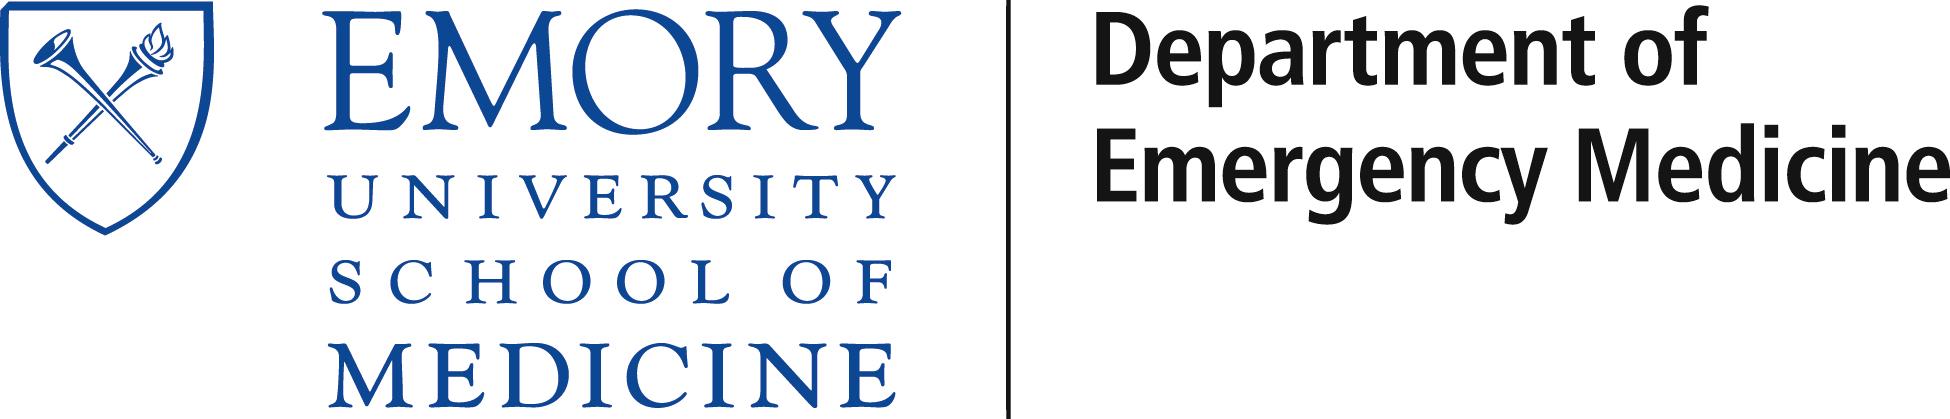 Emory University School of Medicine Department of Emergency Medicine